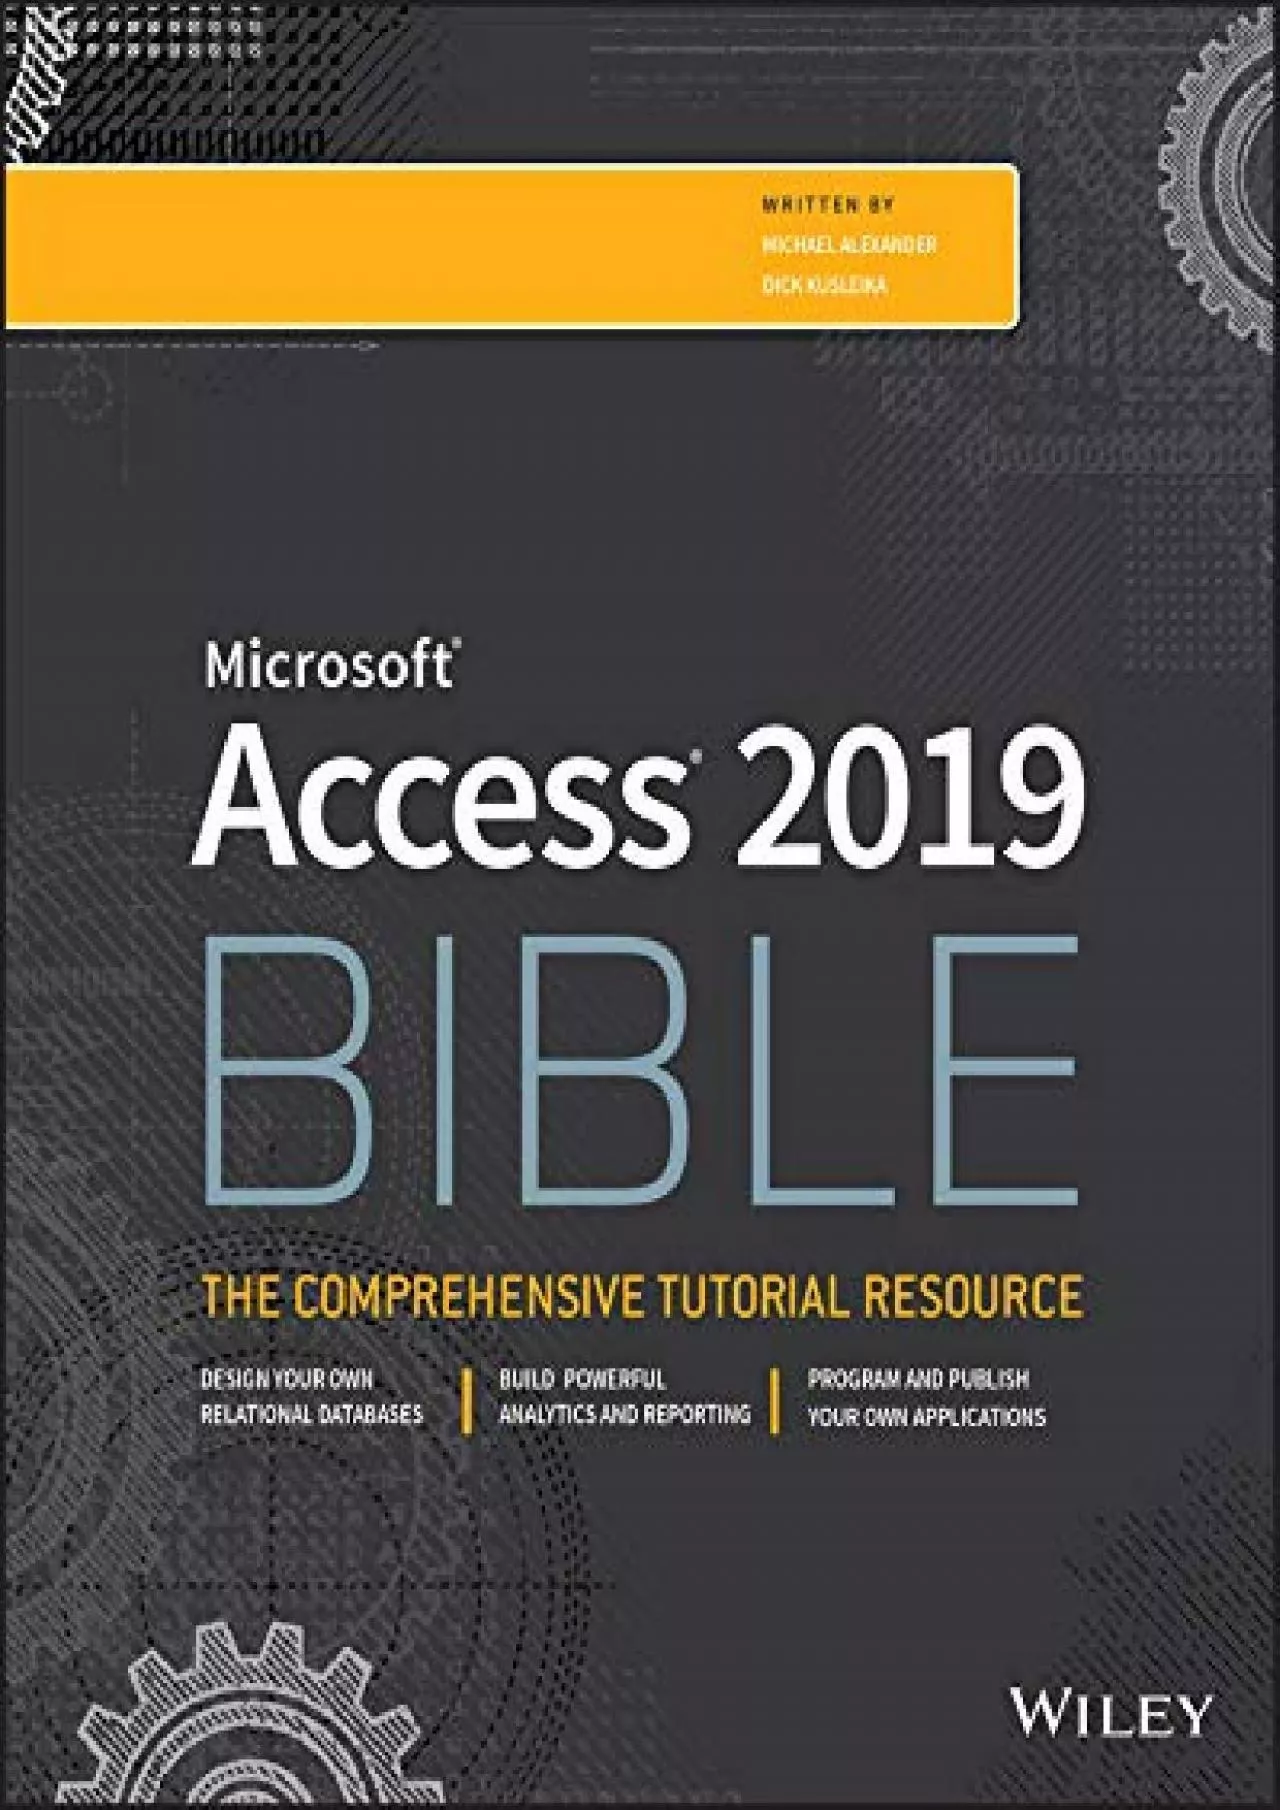 (EBOOK)-Access 2019 Bible